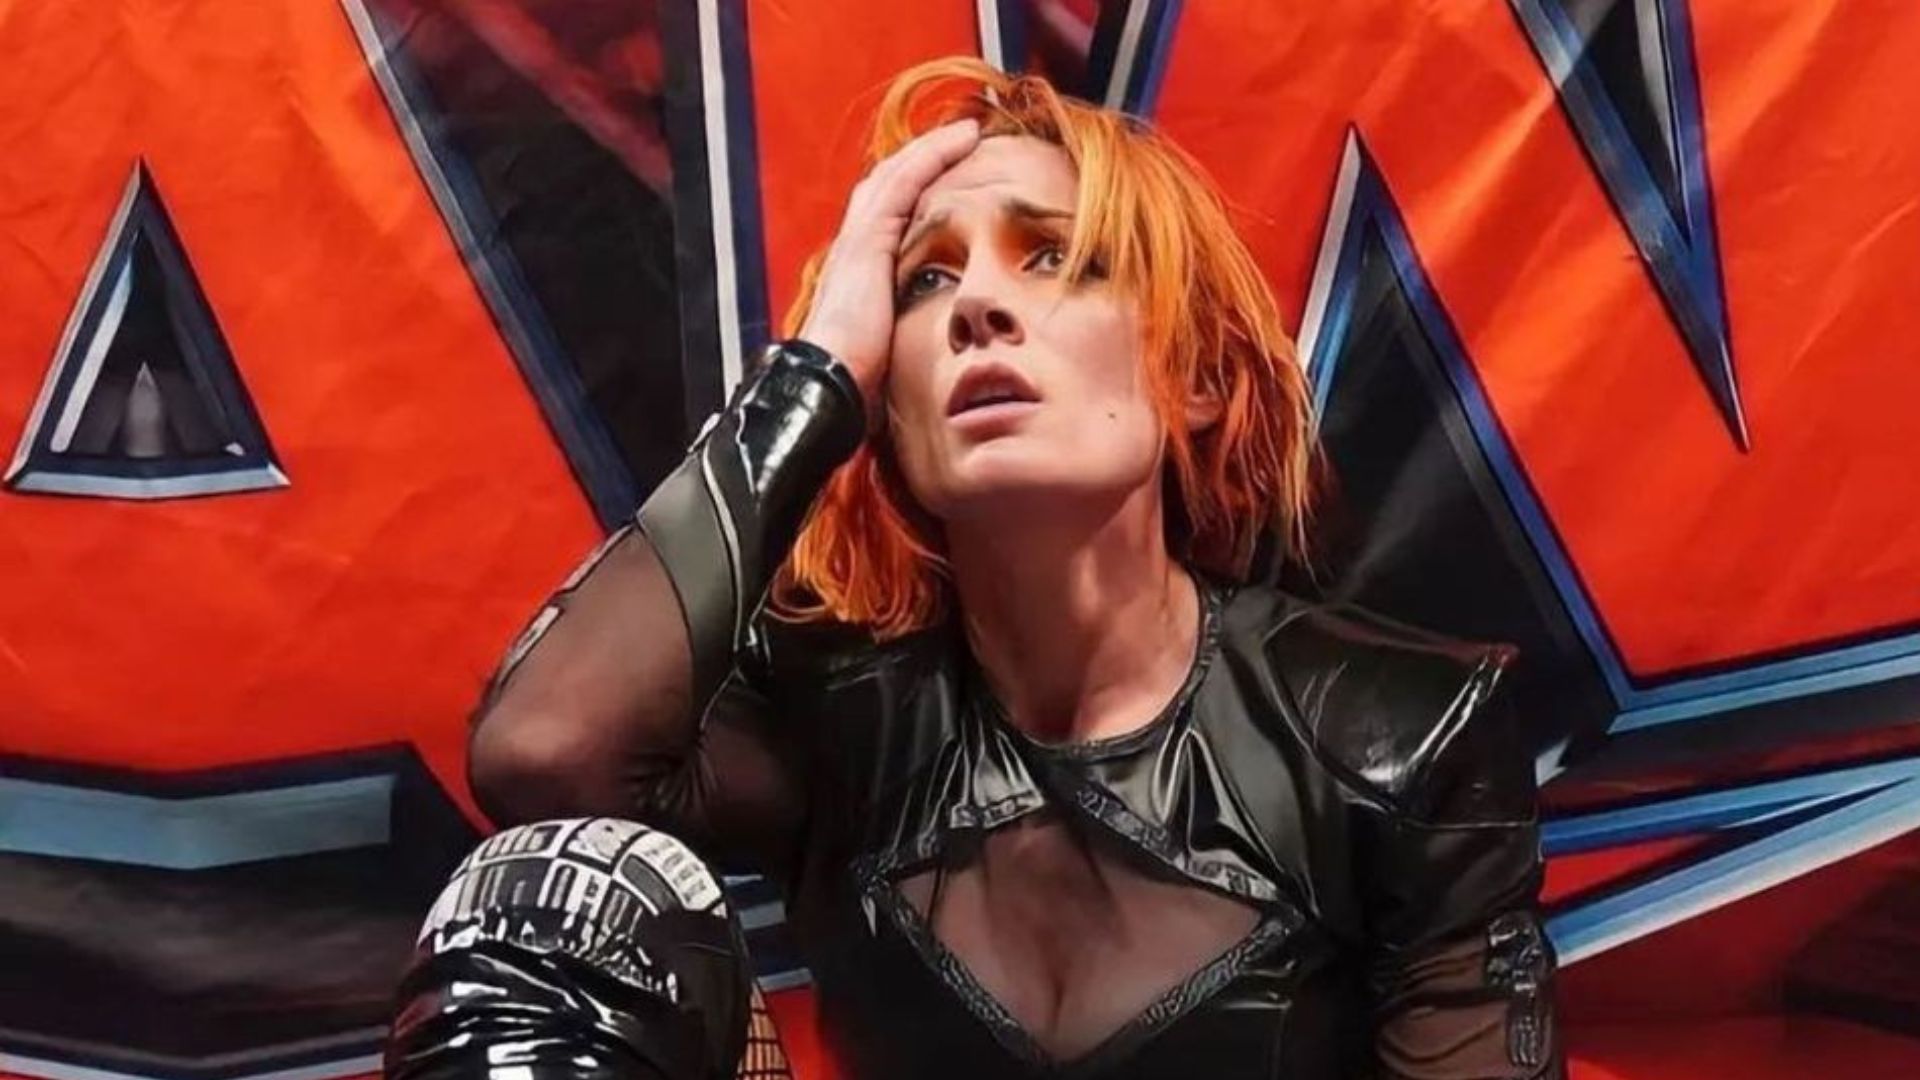 Becky Lynch is a former WWE Women